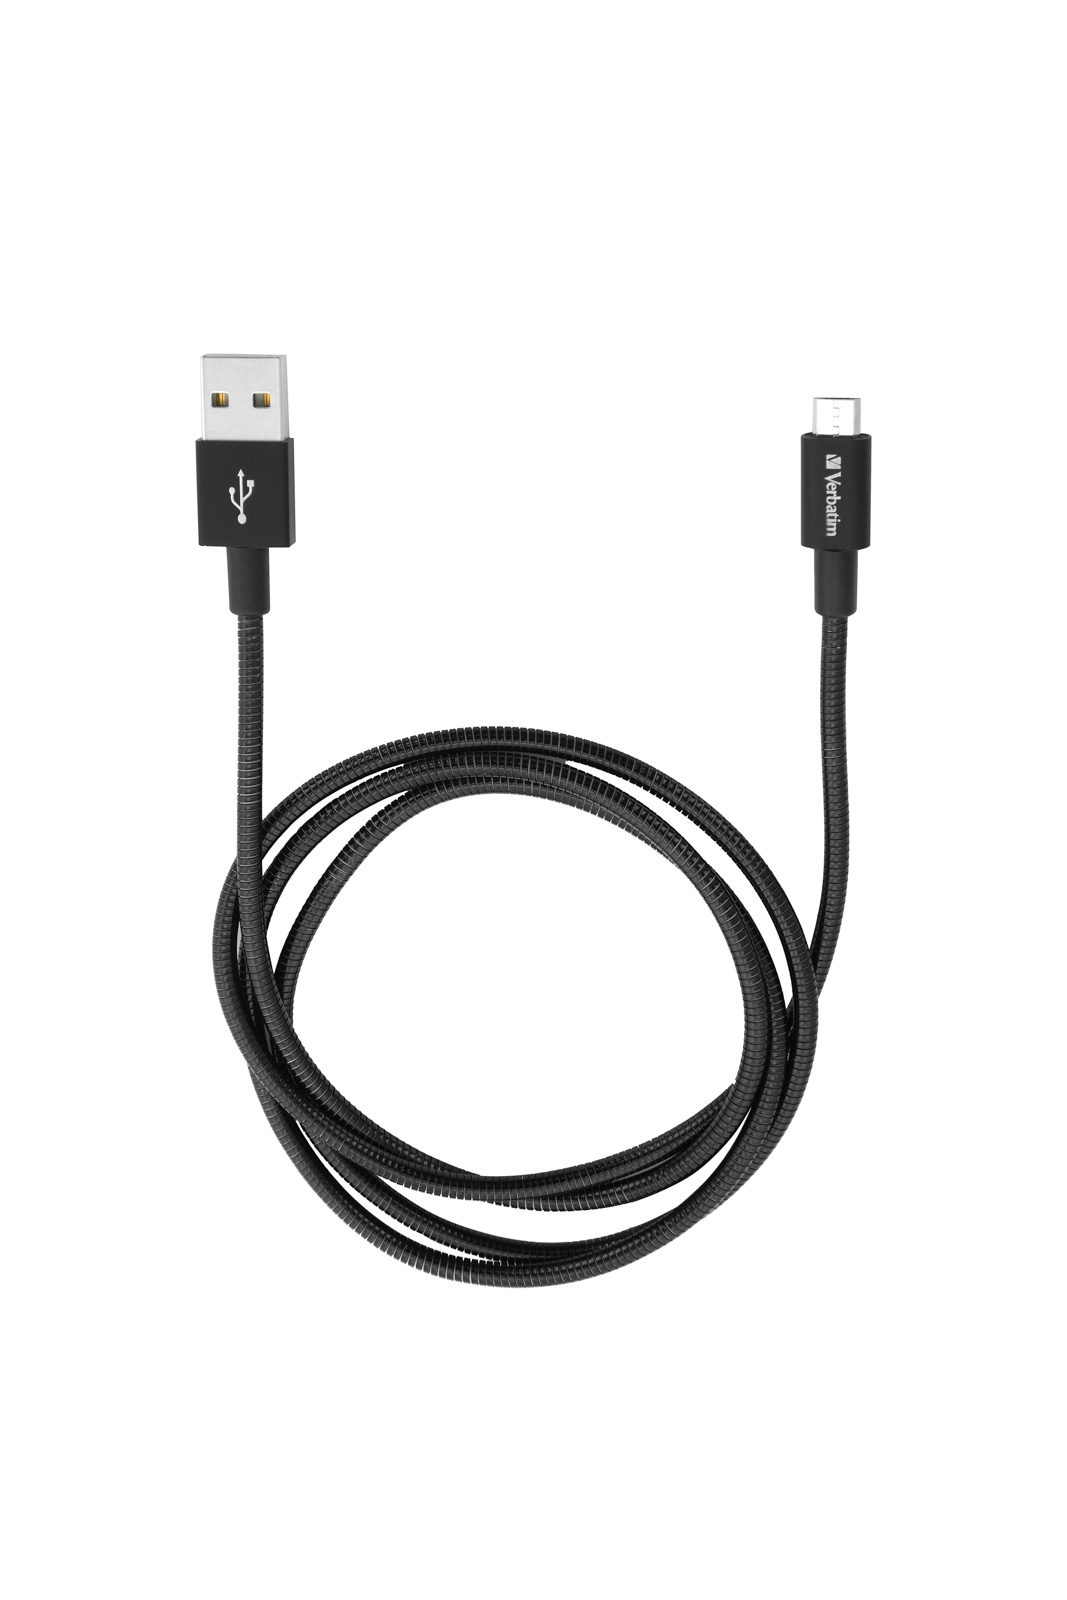 Photos - Cable (video, audio, USB) Verbatim Micro USB Sync & Charge Cable 100cm Black 48863 